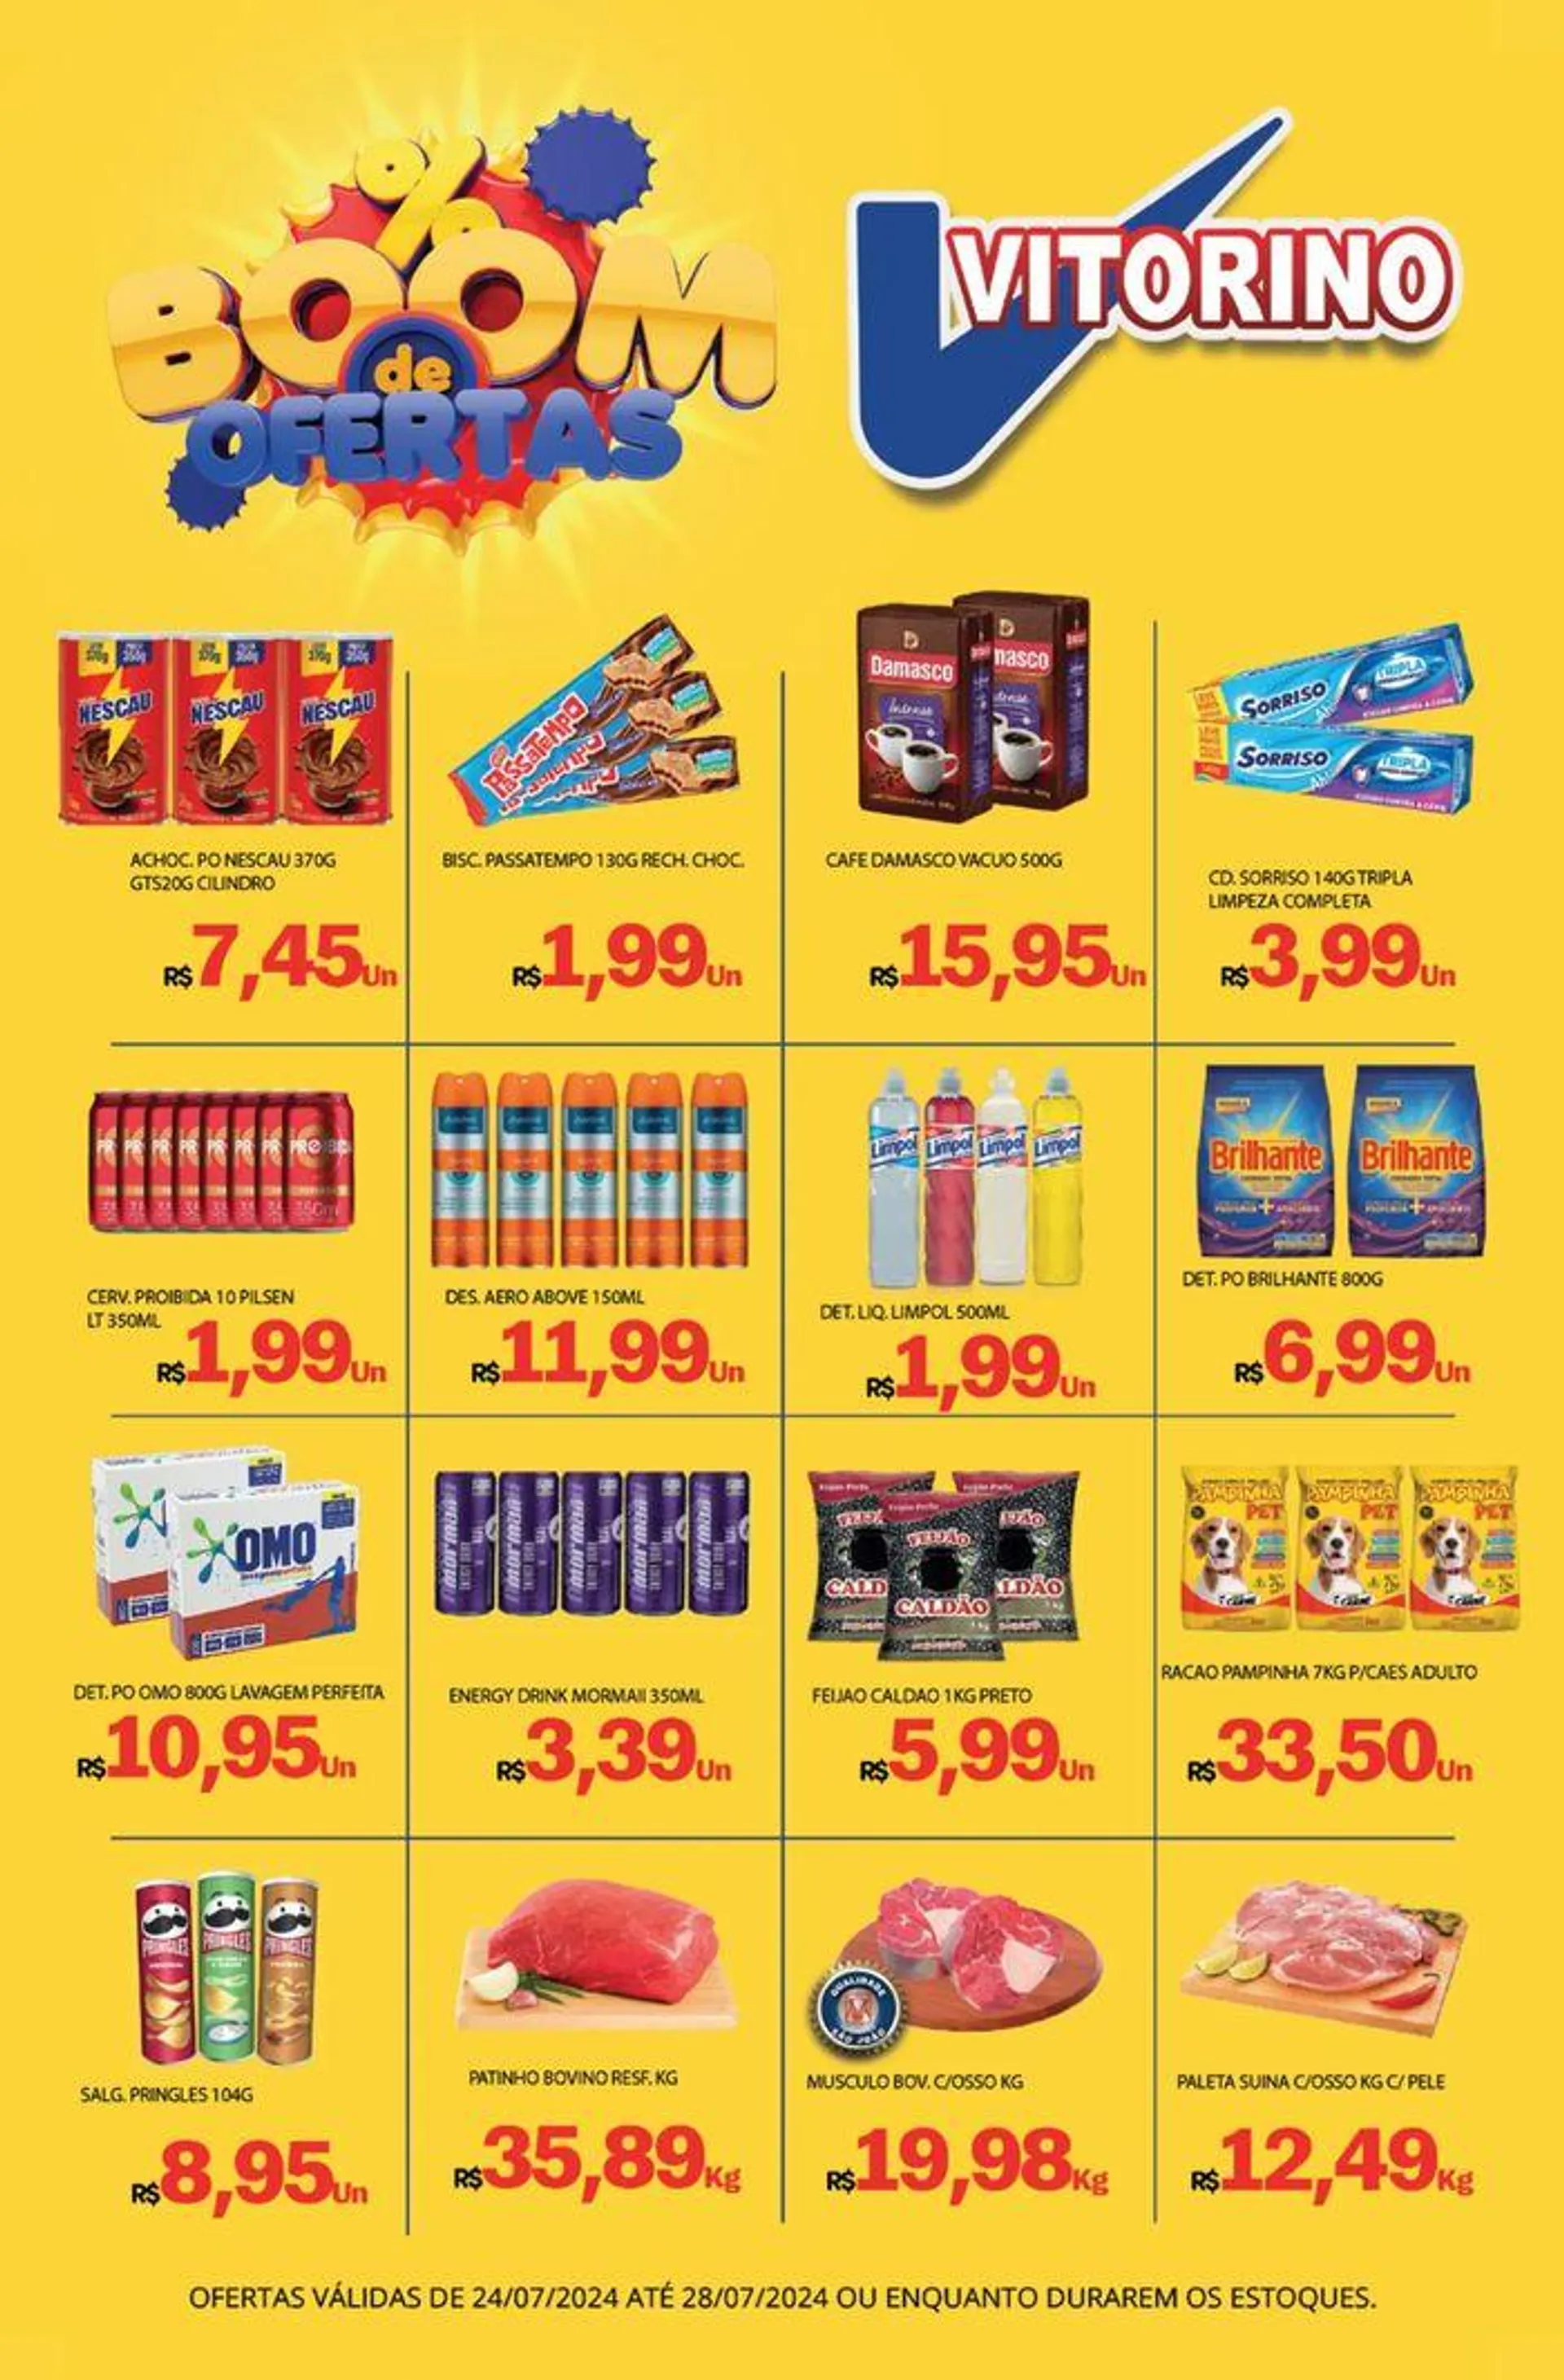 Oferta Supermercado Vitorino - 1